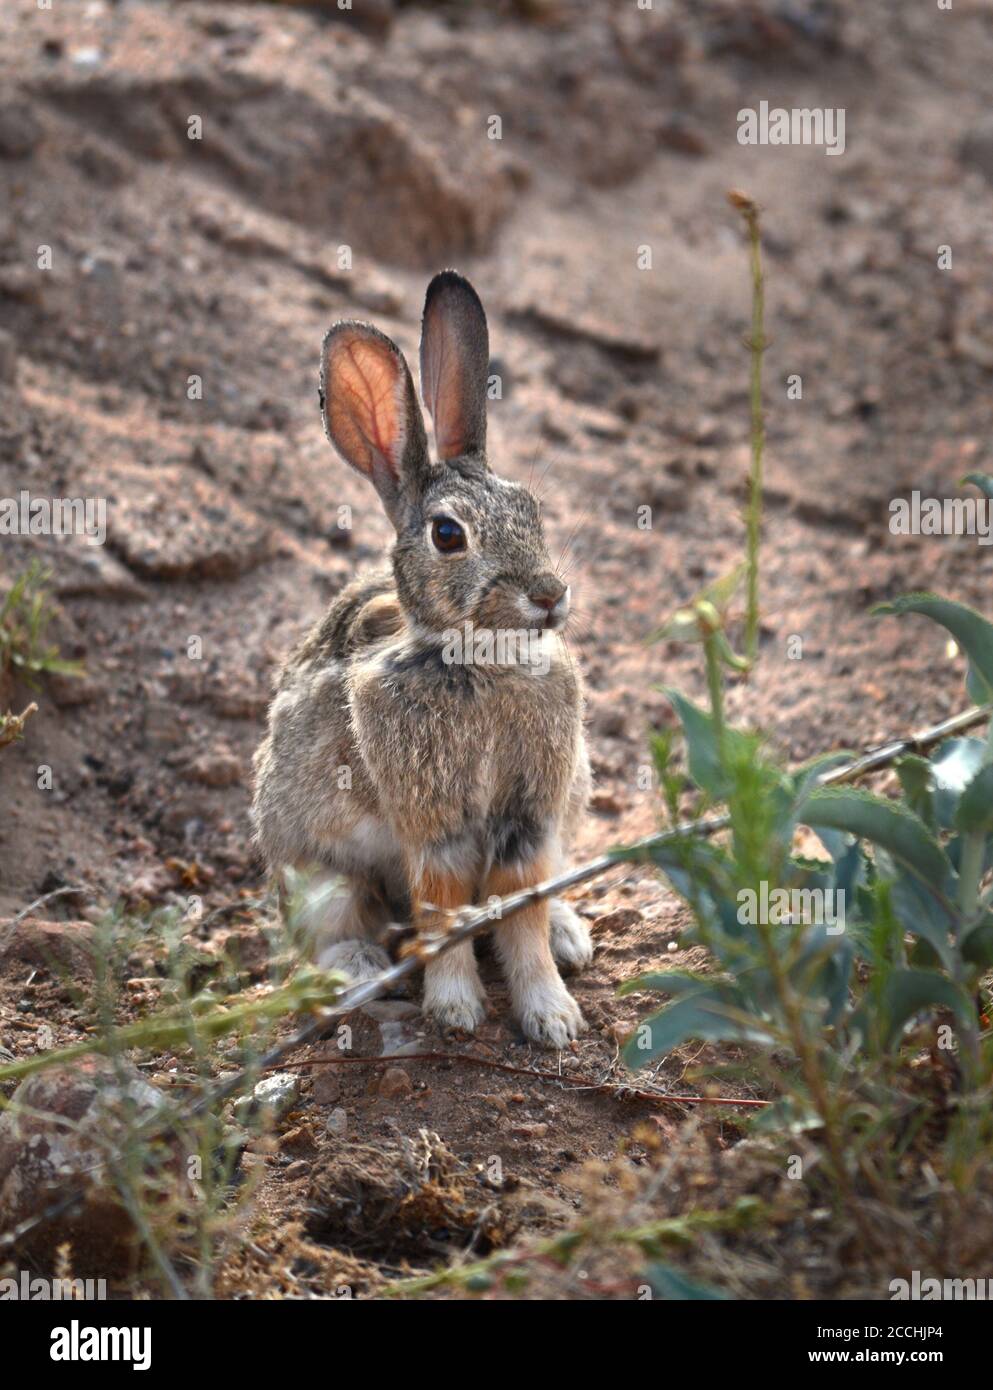 A desert cottontail rabbit in the American Southwest desert. Stock Photo